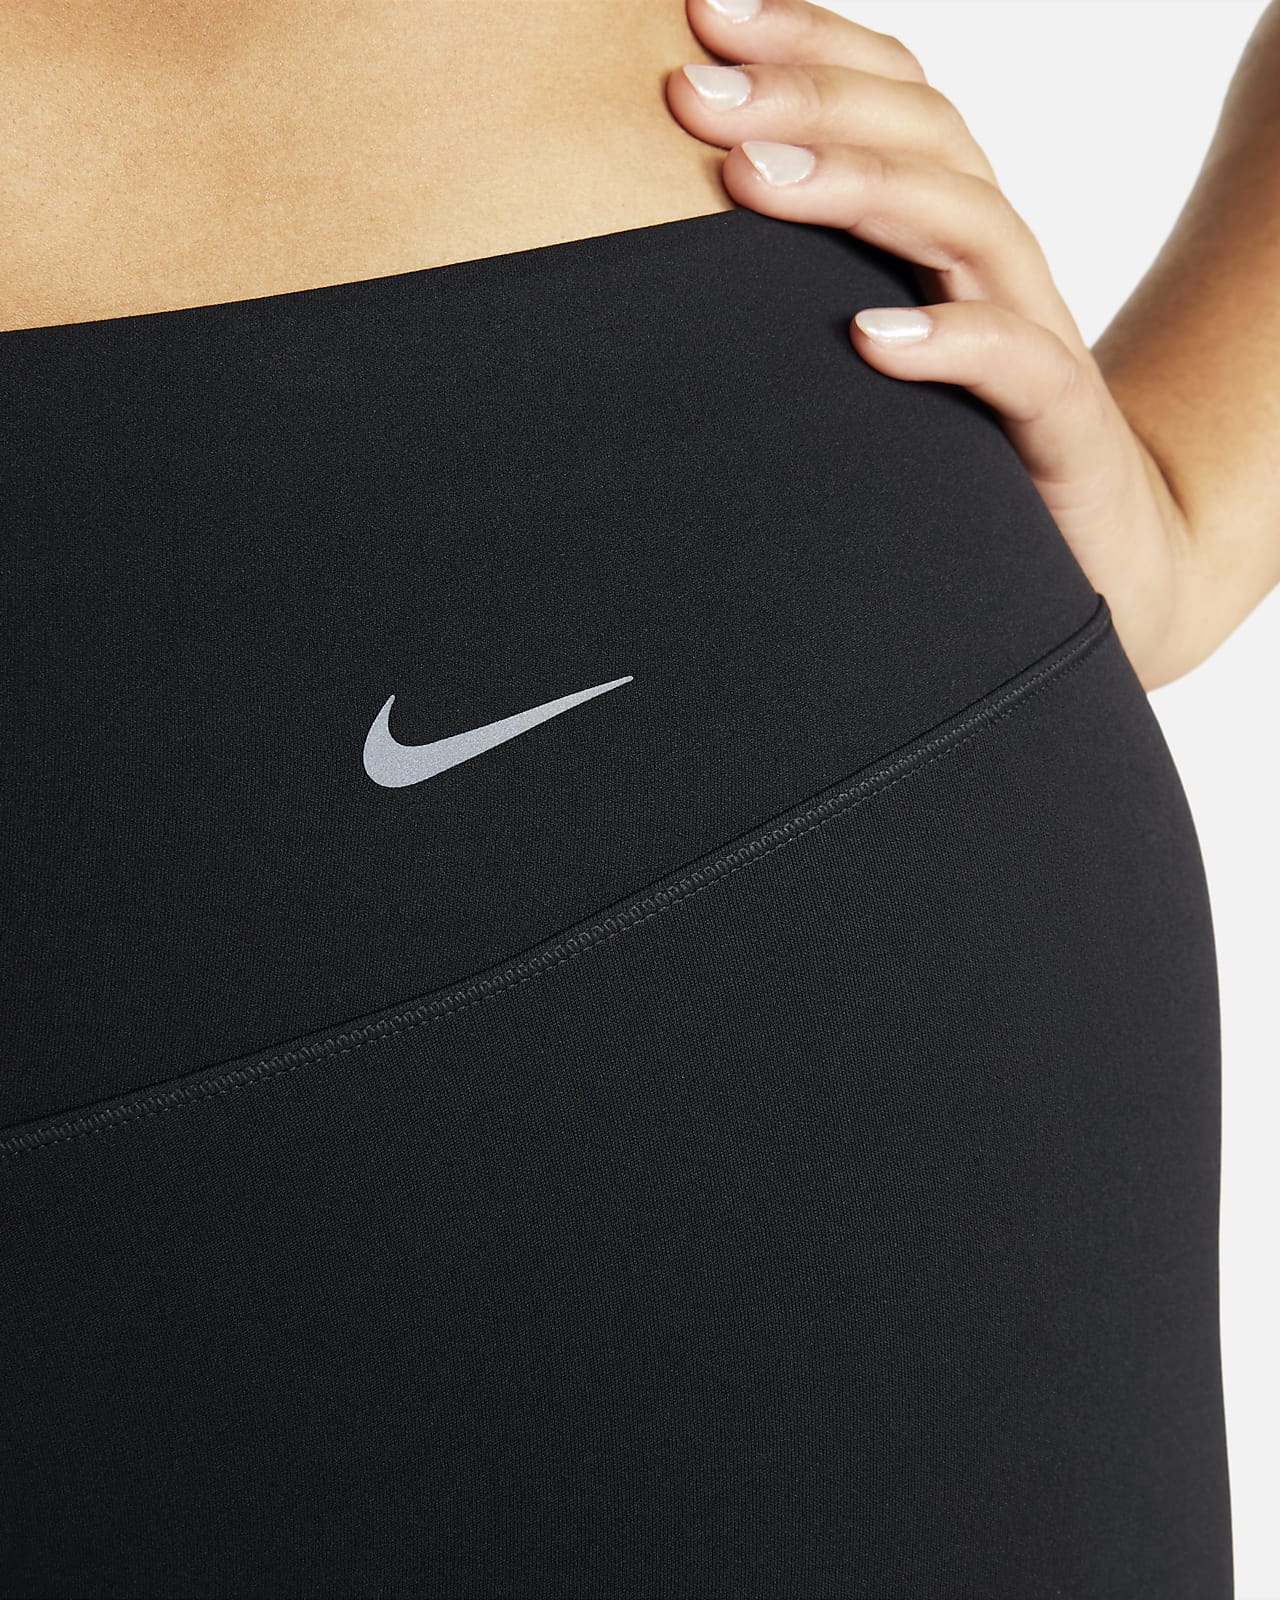 Nike Zenvy Women's Gentle-Support High-Waisted 20cm (approx